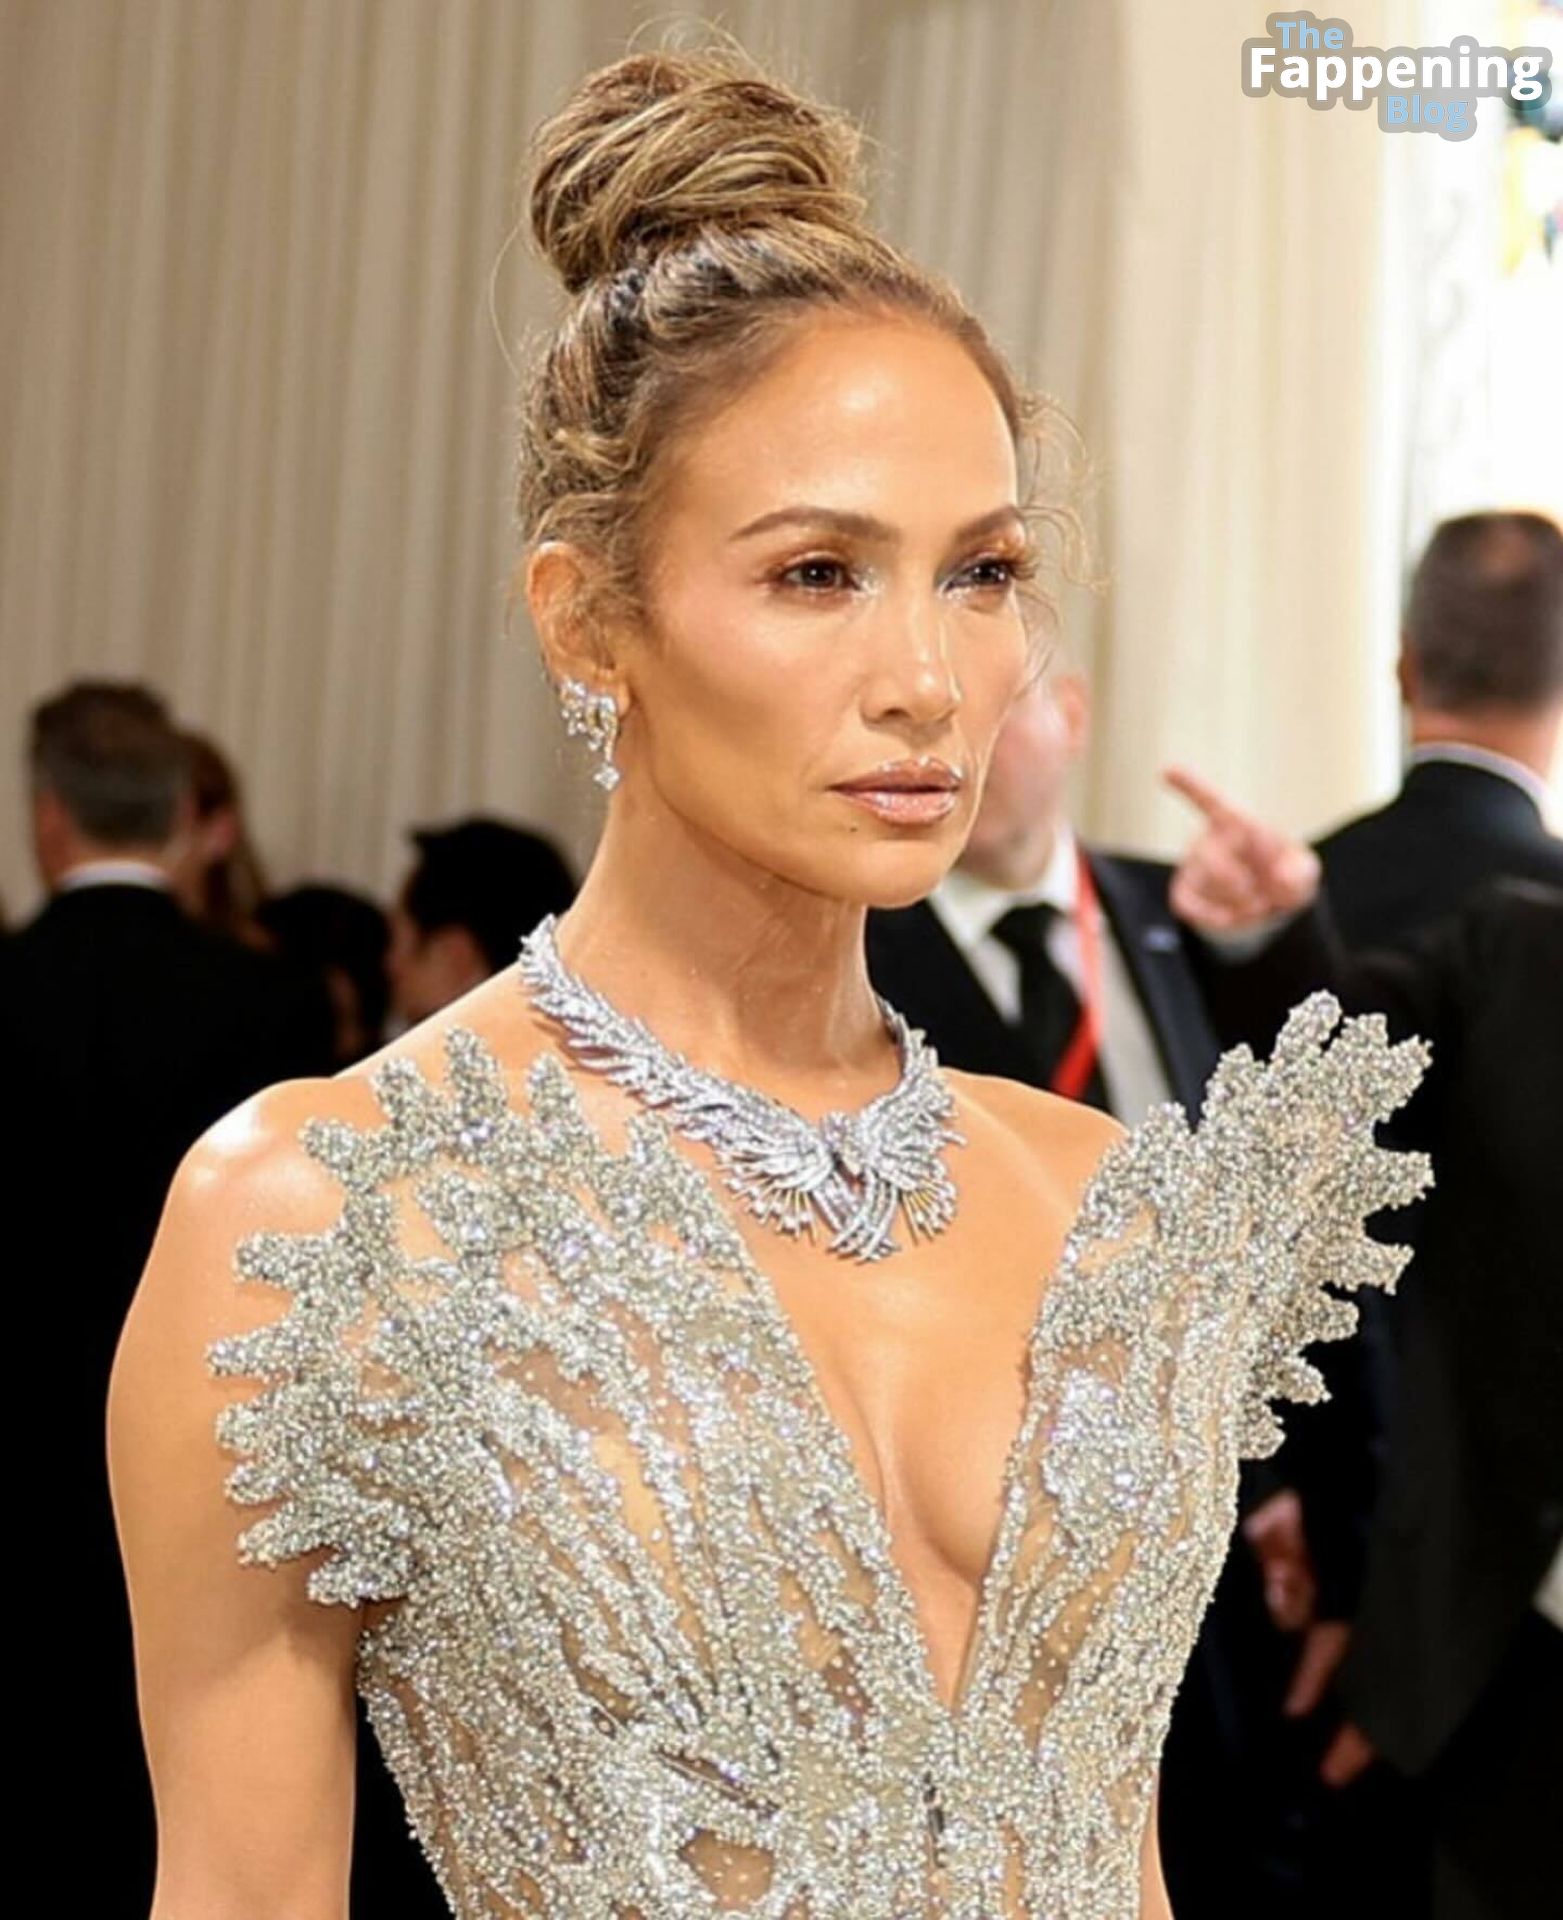 Jennifer-Lopez-Hot-14-The-Fappening-Blog.jpg